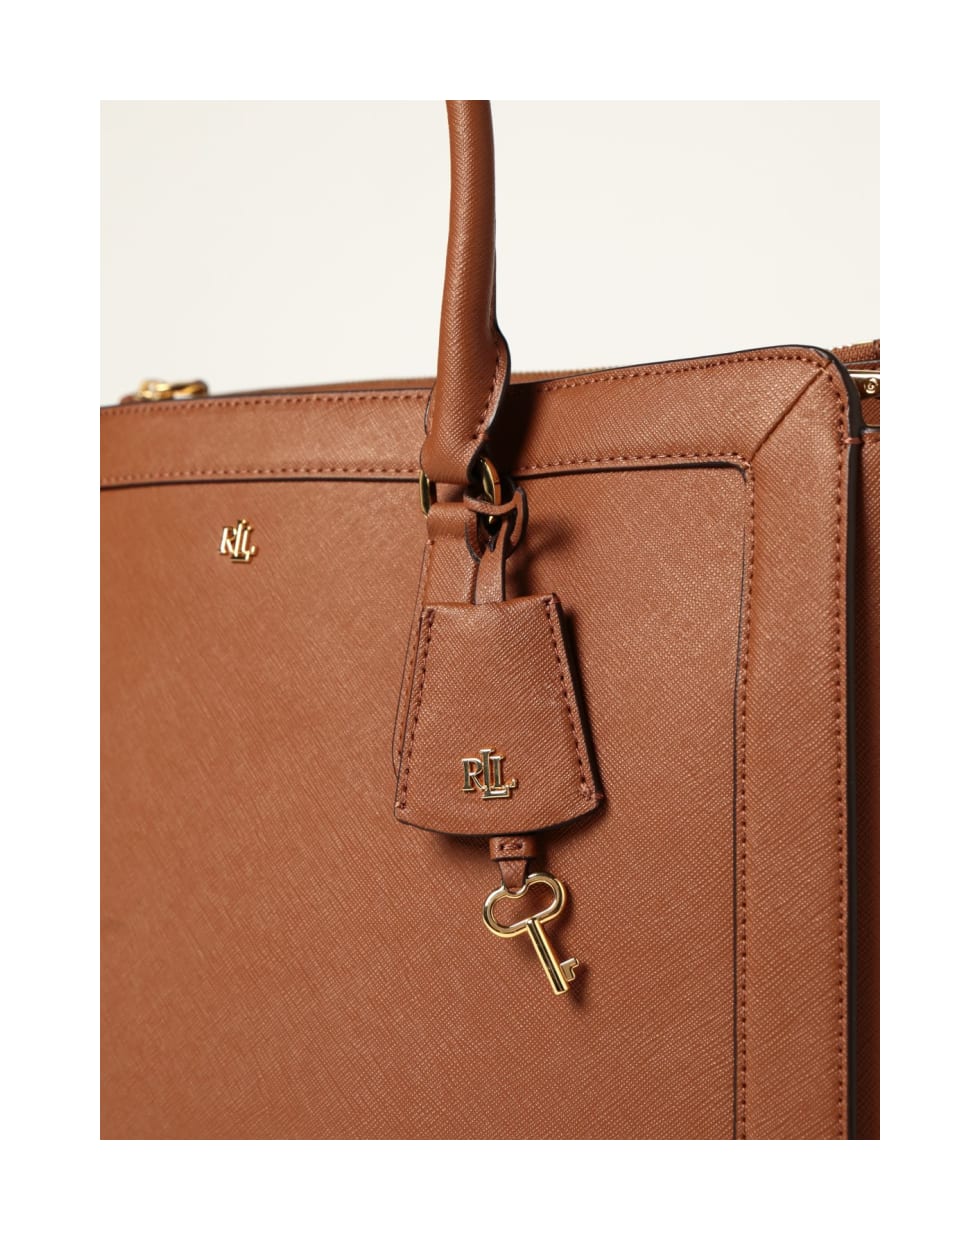 Vleugels prinses Vertrouwen Tote Bags Lauren Ralph Lauren Shopping Bag In Saffiano Leather | italist